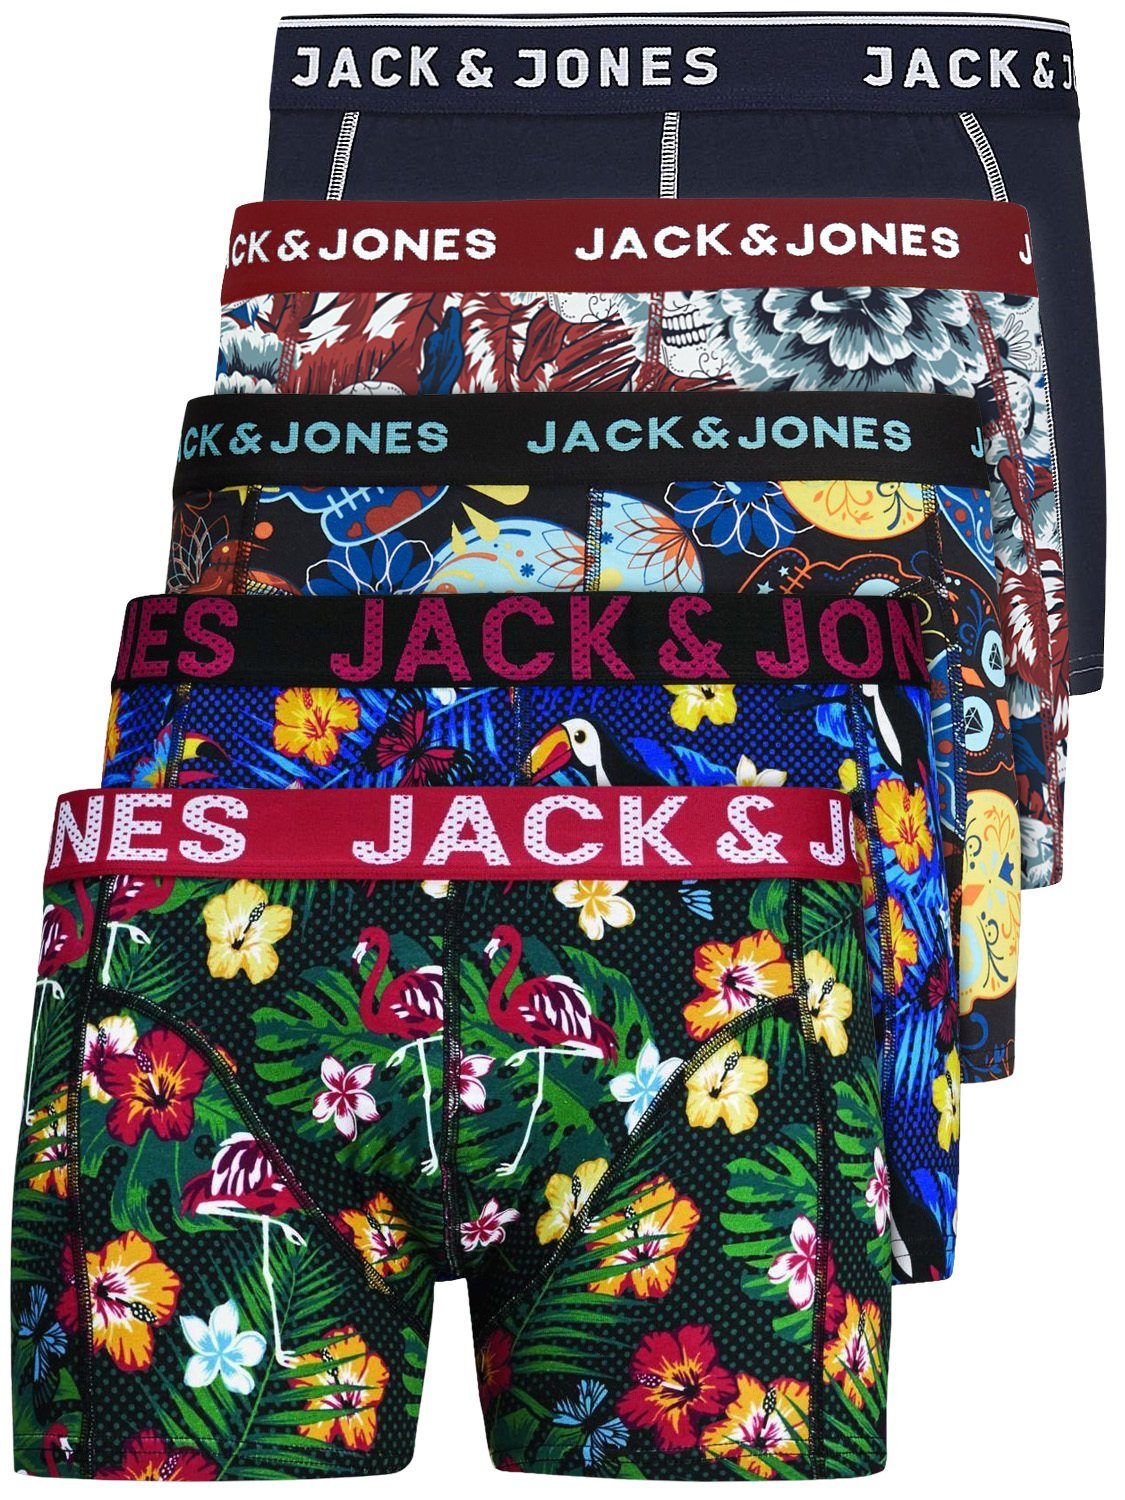 Jack & Jones Боксерские мужские трусы, боксерки Jacvel (5-St., 5er Pack) gute Passform durch elastische Baumwollqualität